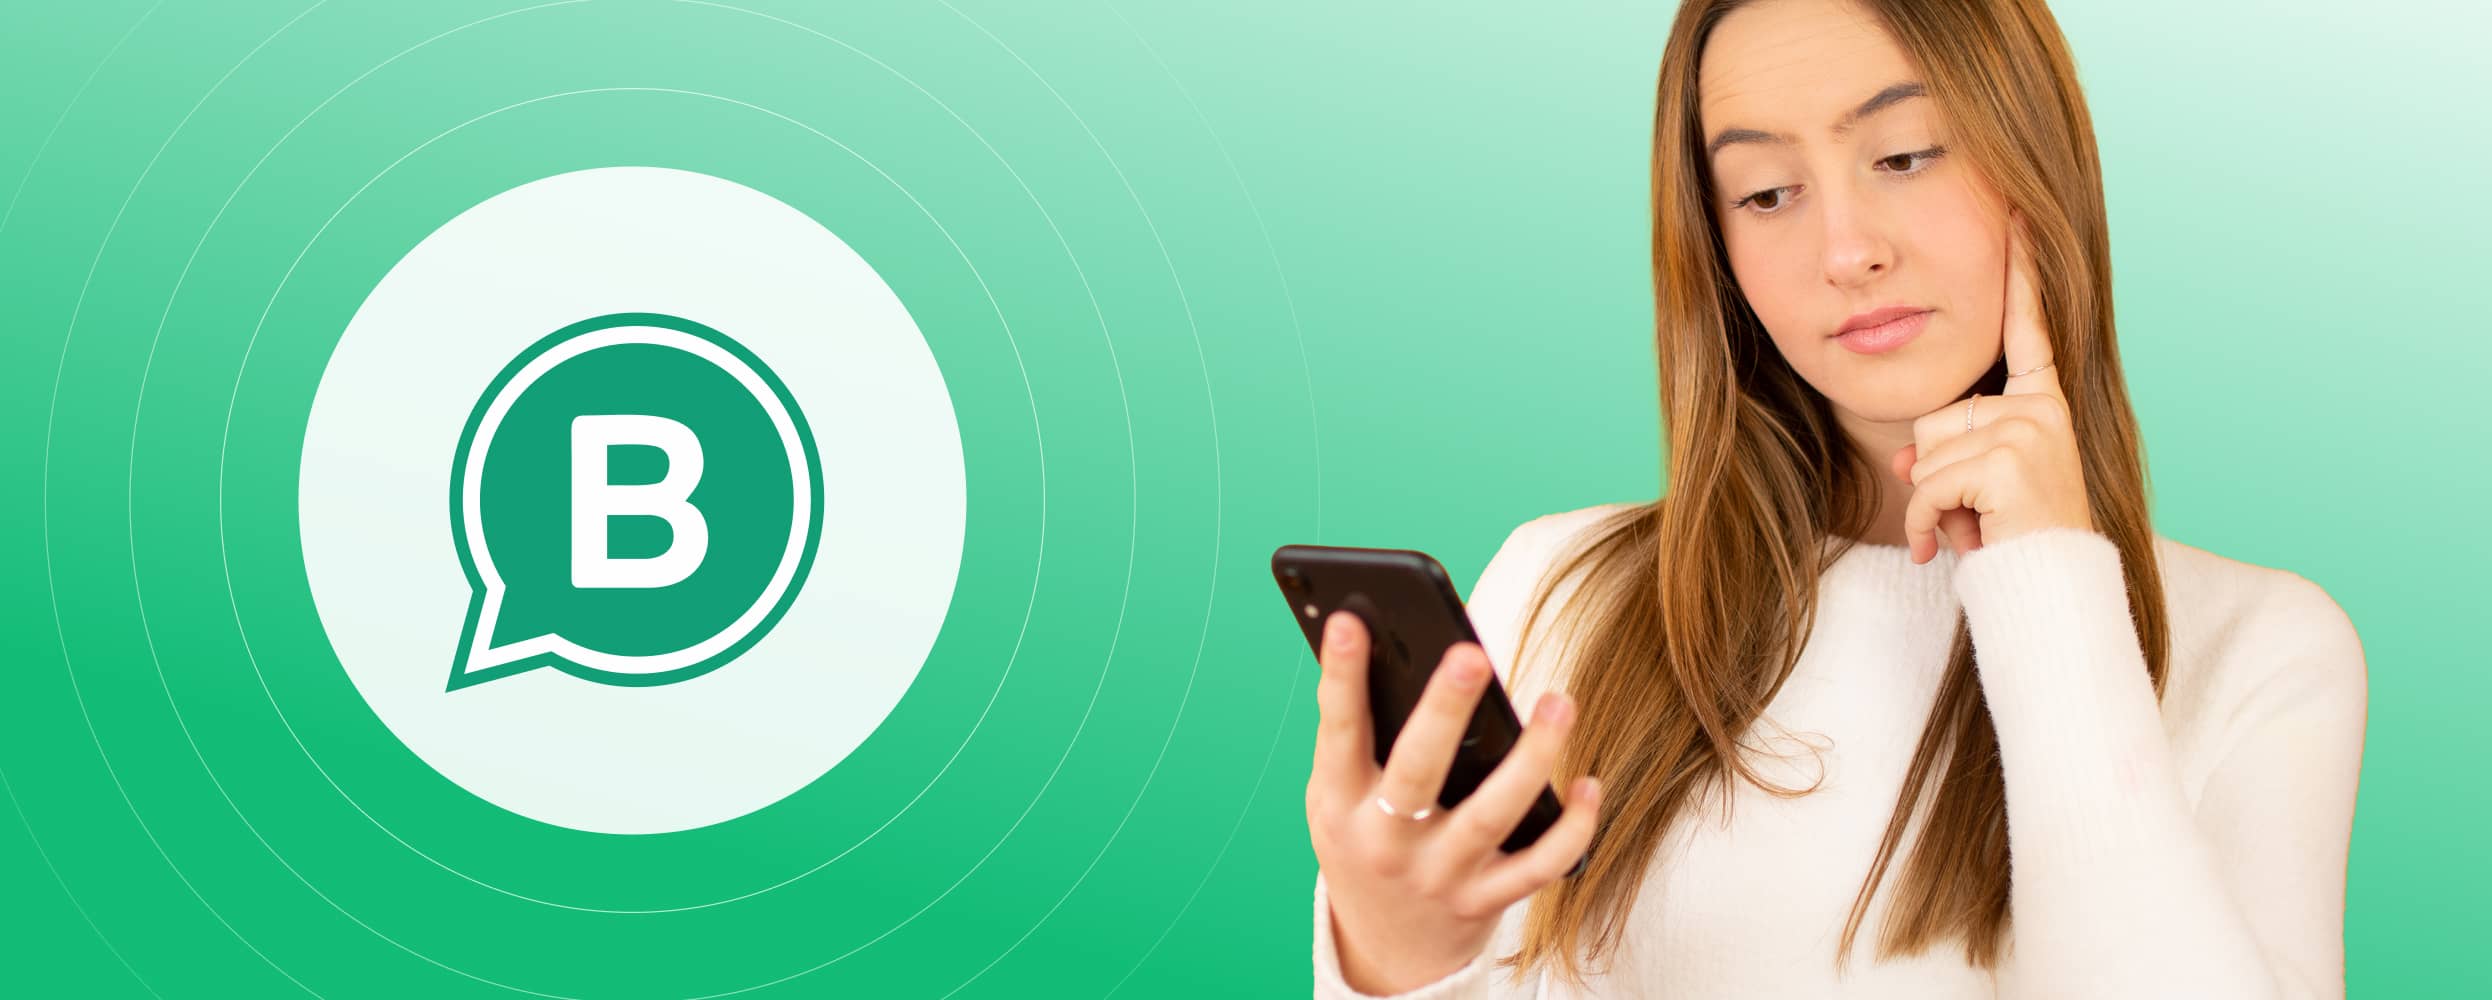 WhatsApp Business Plattform als Alternative zu Mobile Apps